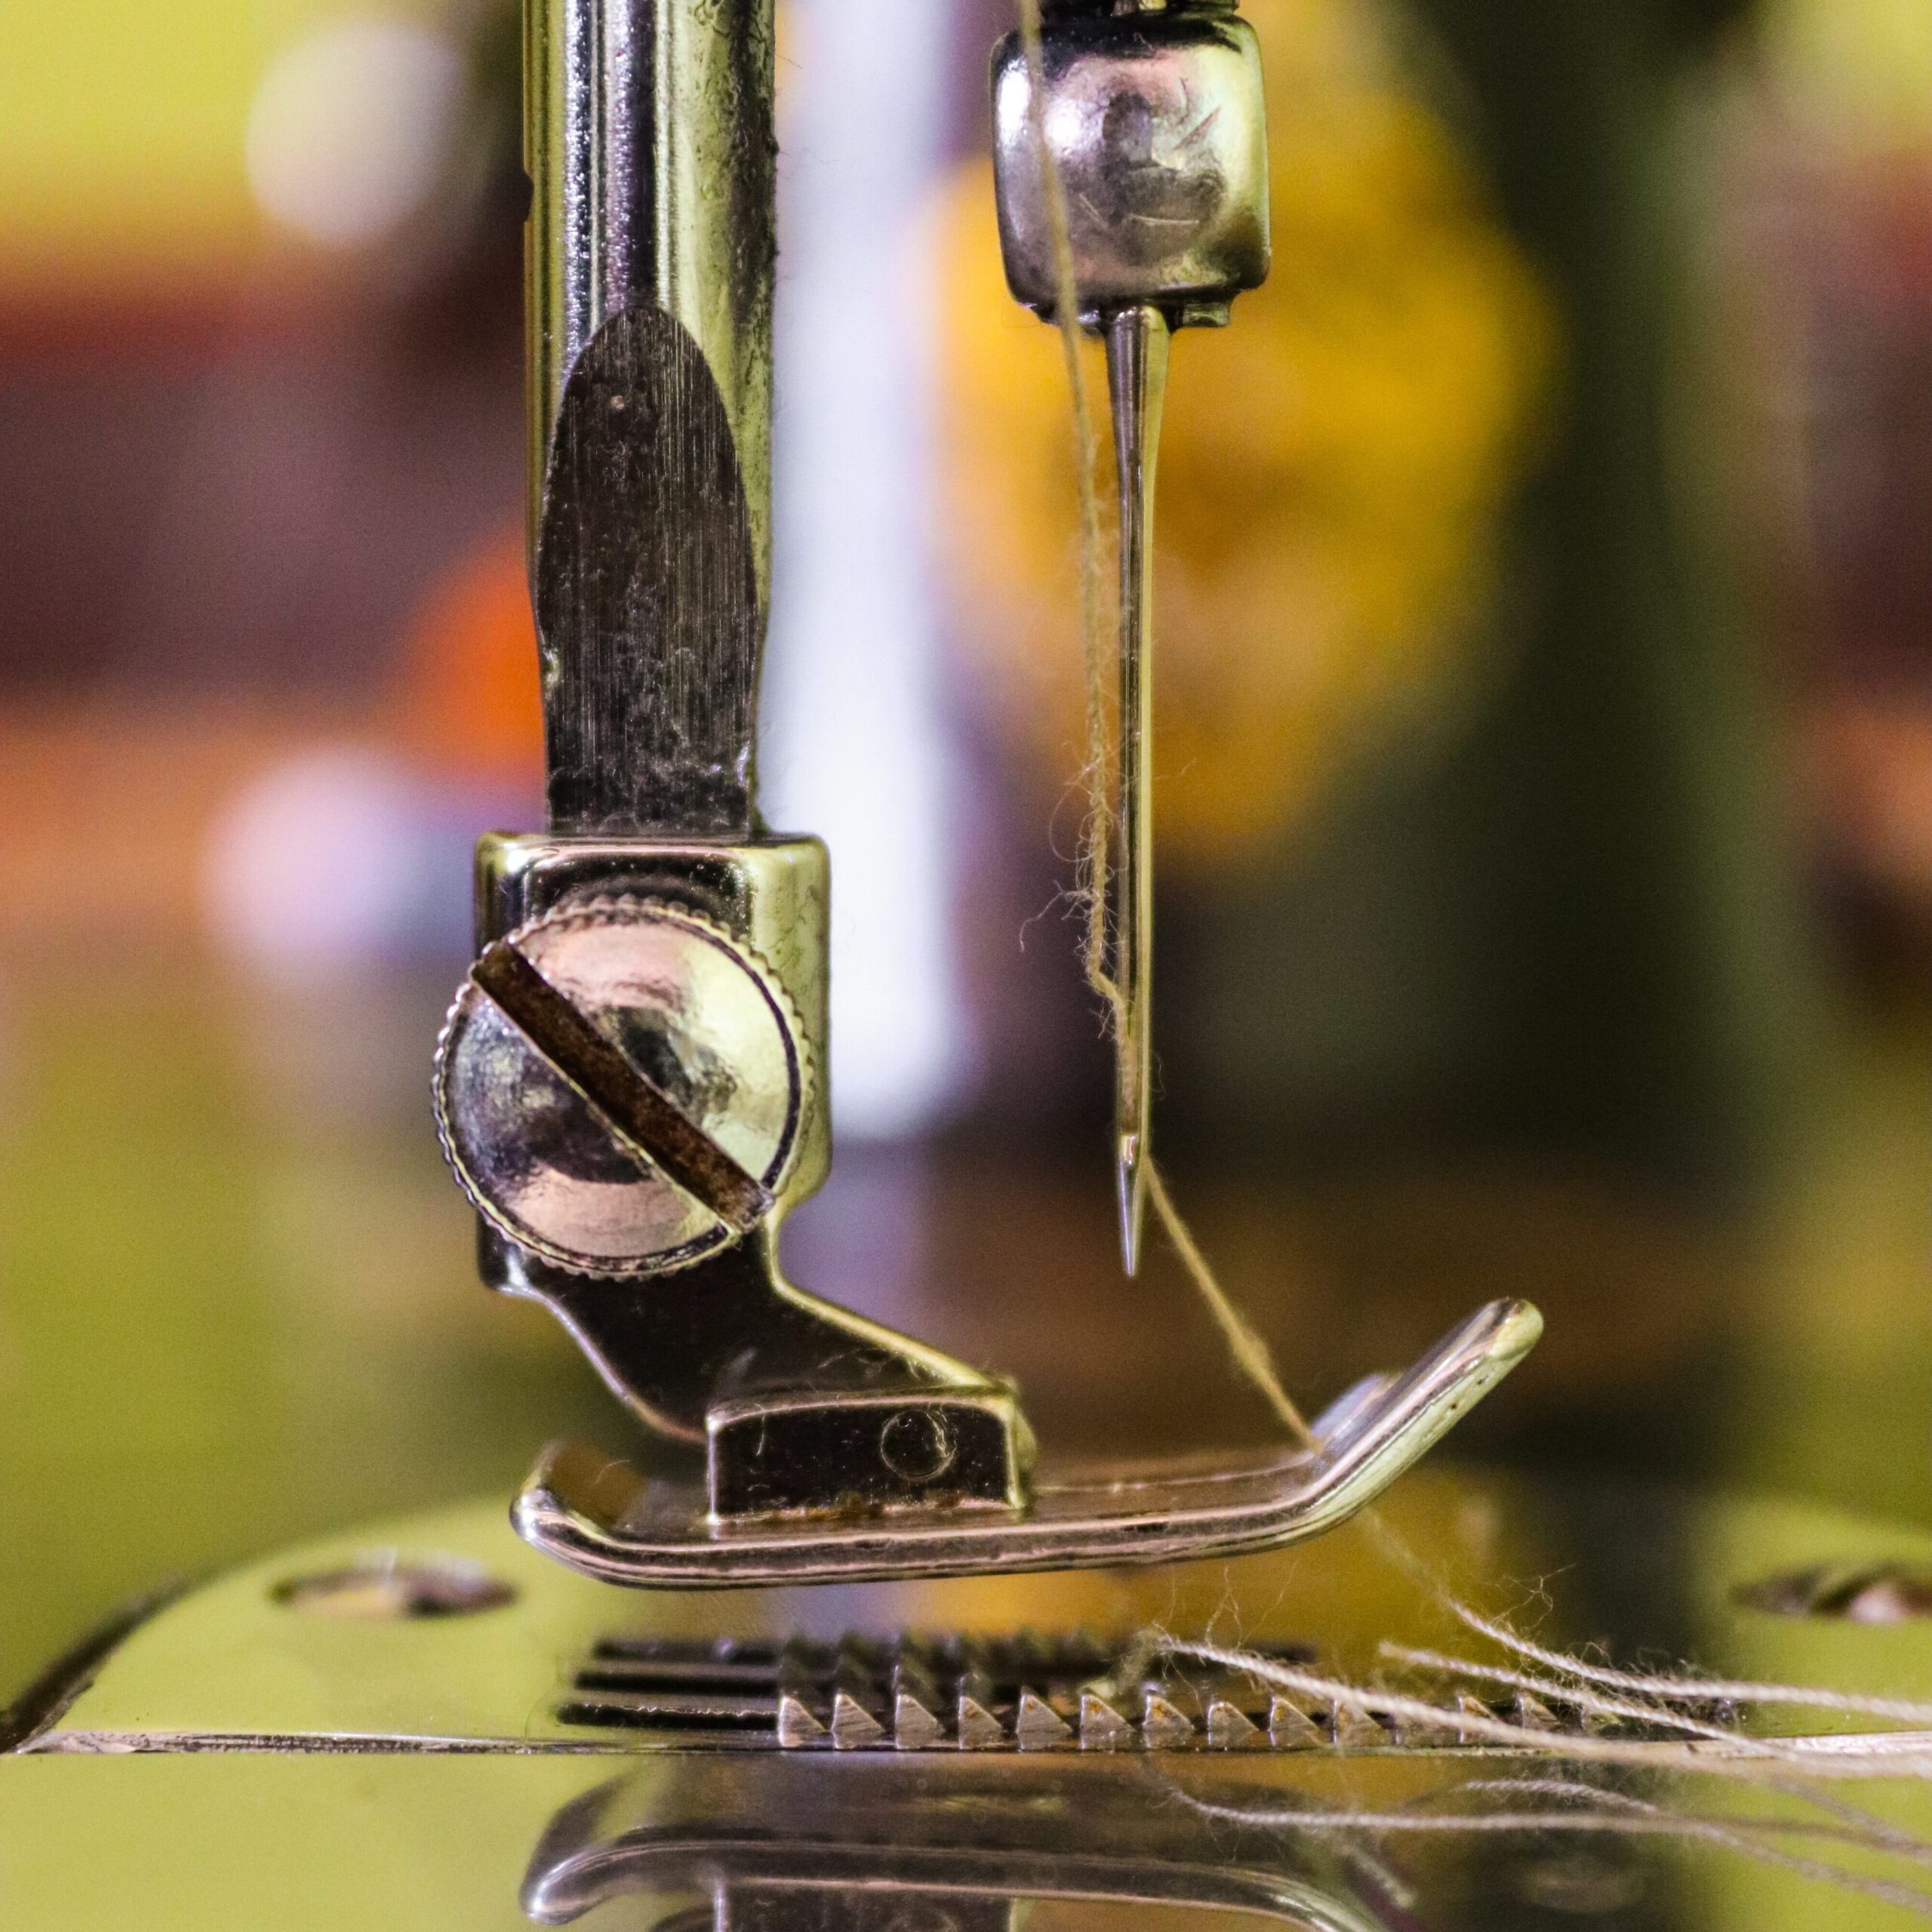 A Machine sewing needle